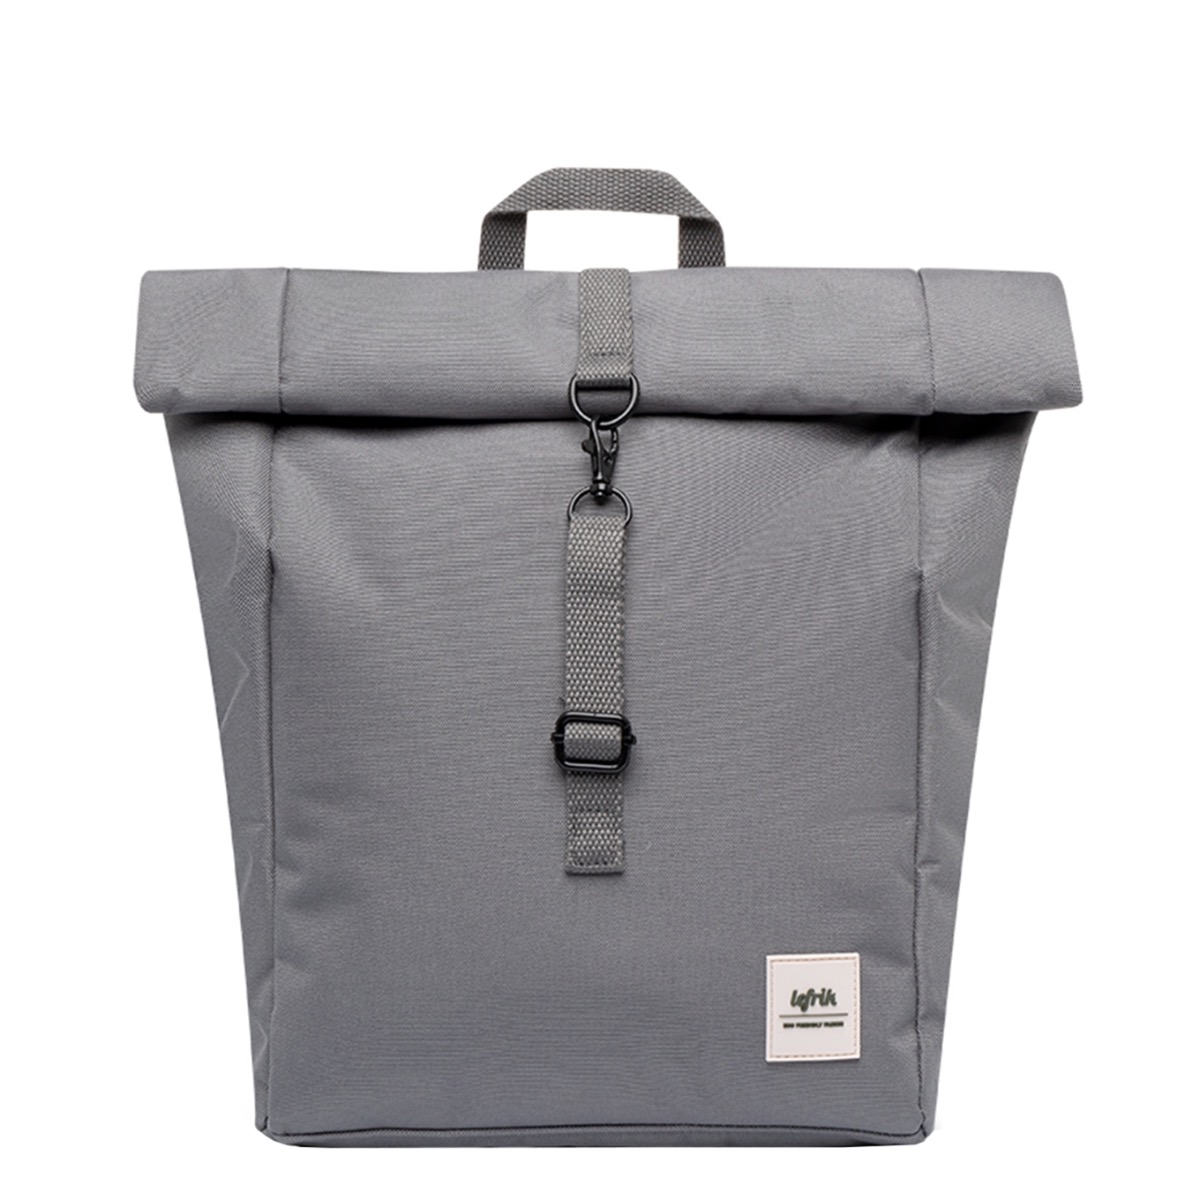 Lefrik Roll Mini Backpack grey